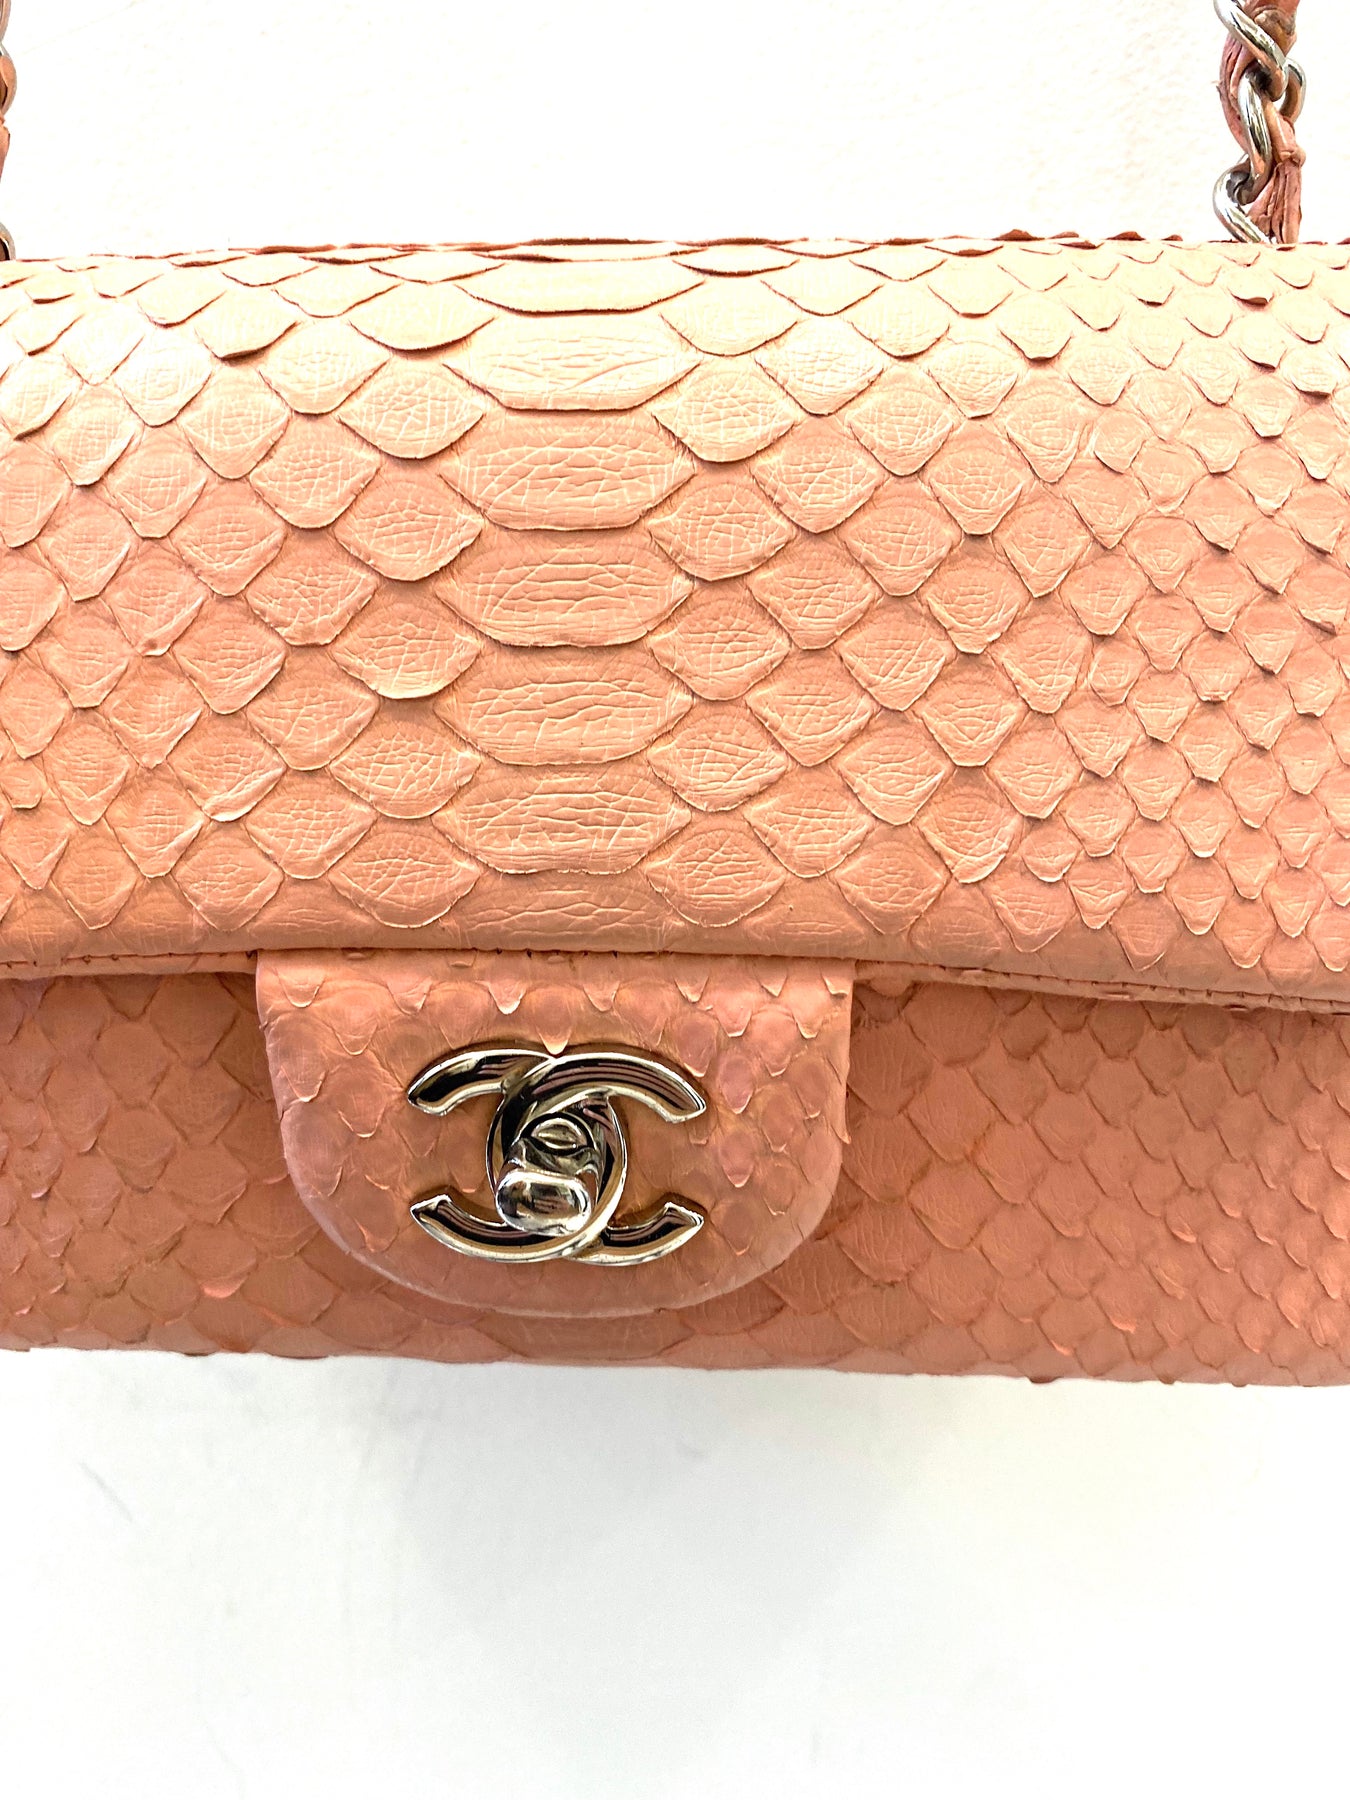 Chanel Mini Flap Bag AS3456 B08840 NJ523, Pink, One Size